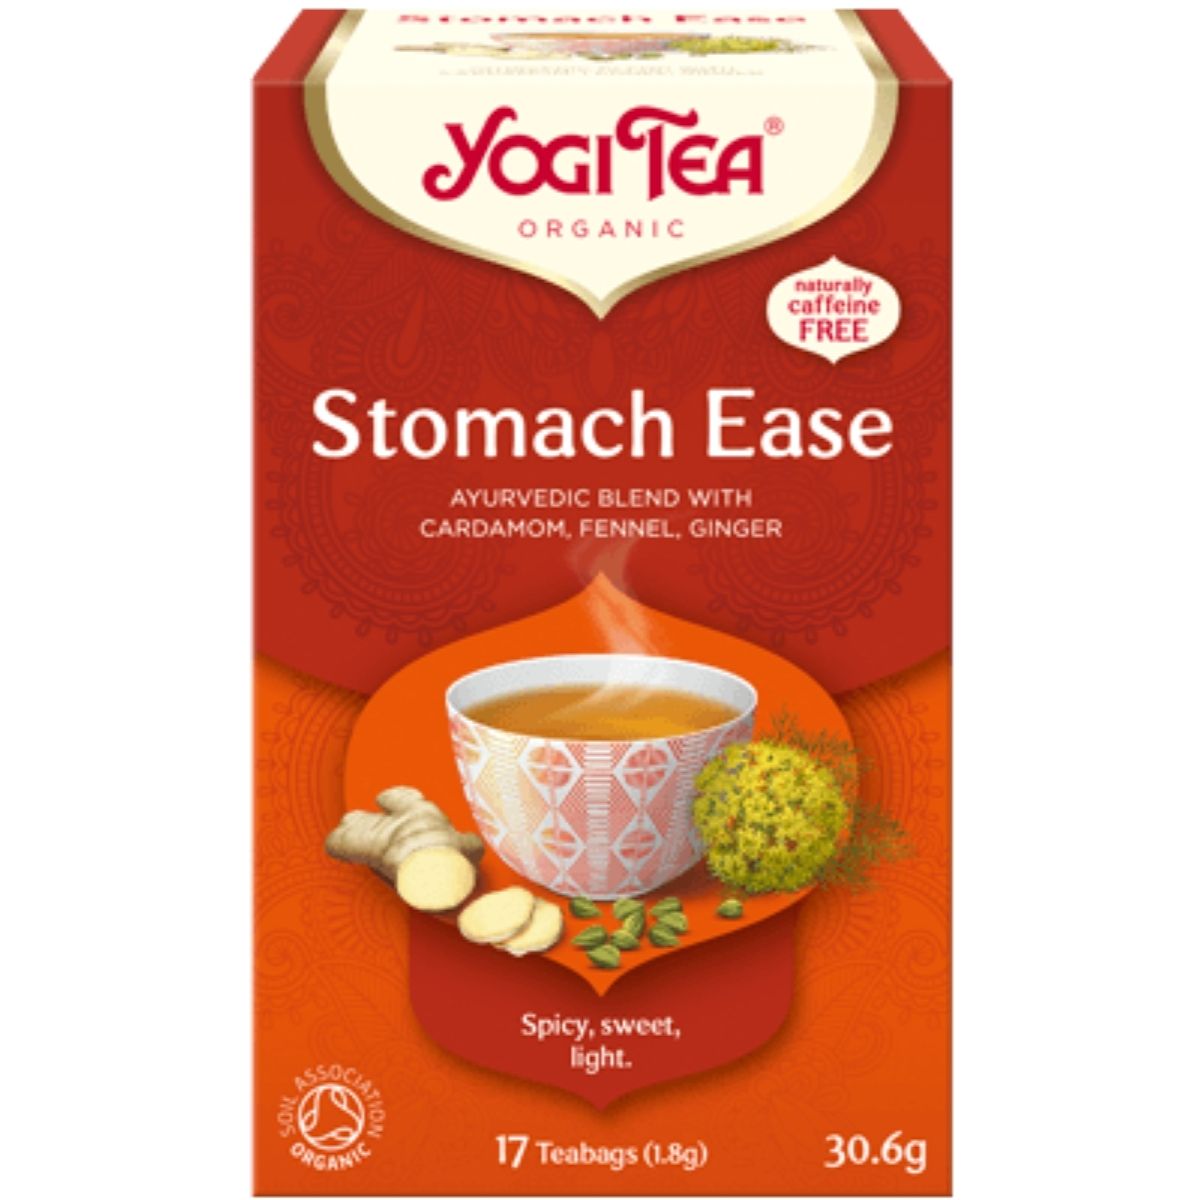 Yogi Tea Stomach Ease Tea 17 Bags - 30.6g